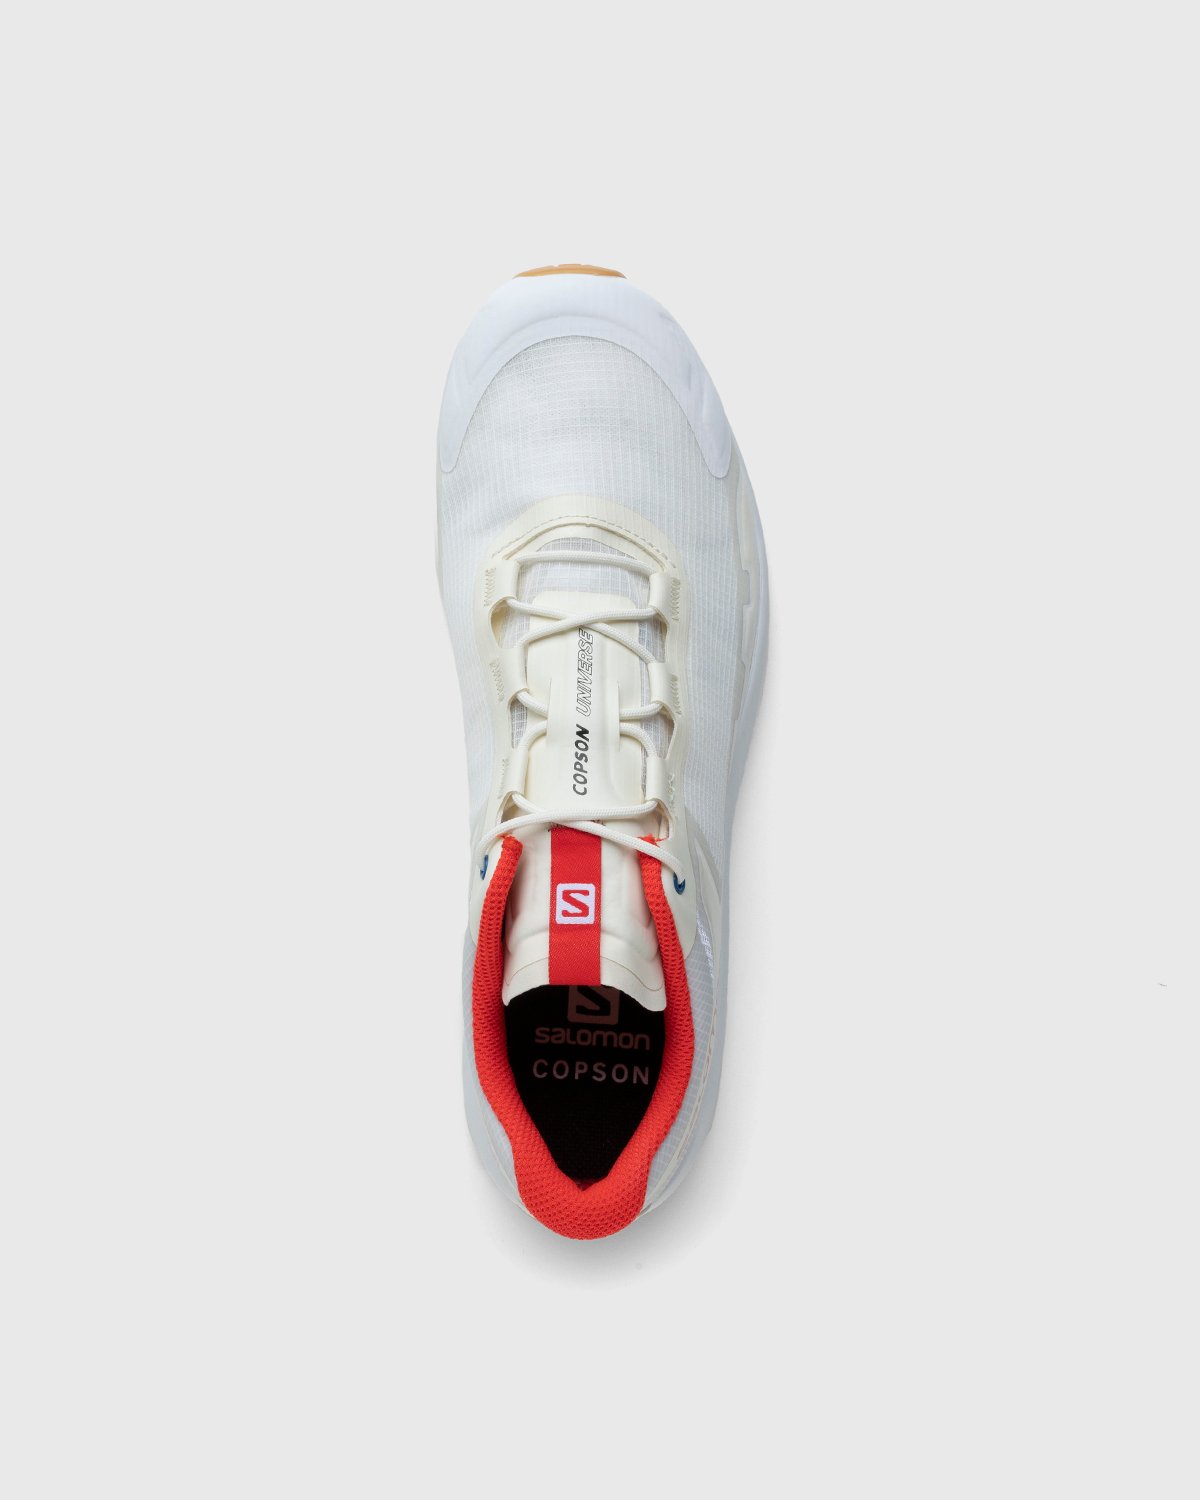 Copson x Salomon - Ultra Raid White/Red - Footwear - White - Image 6